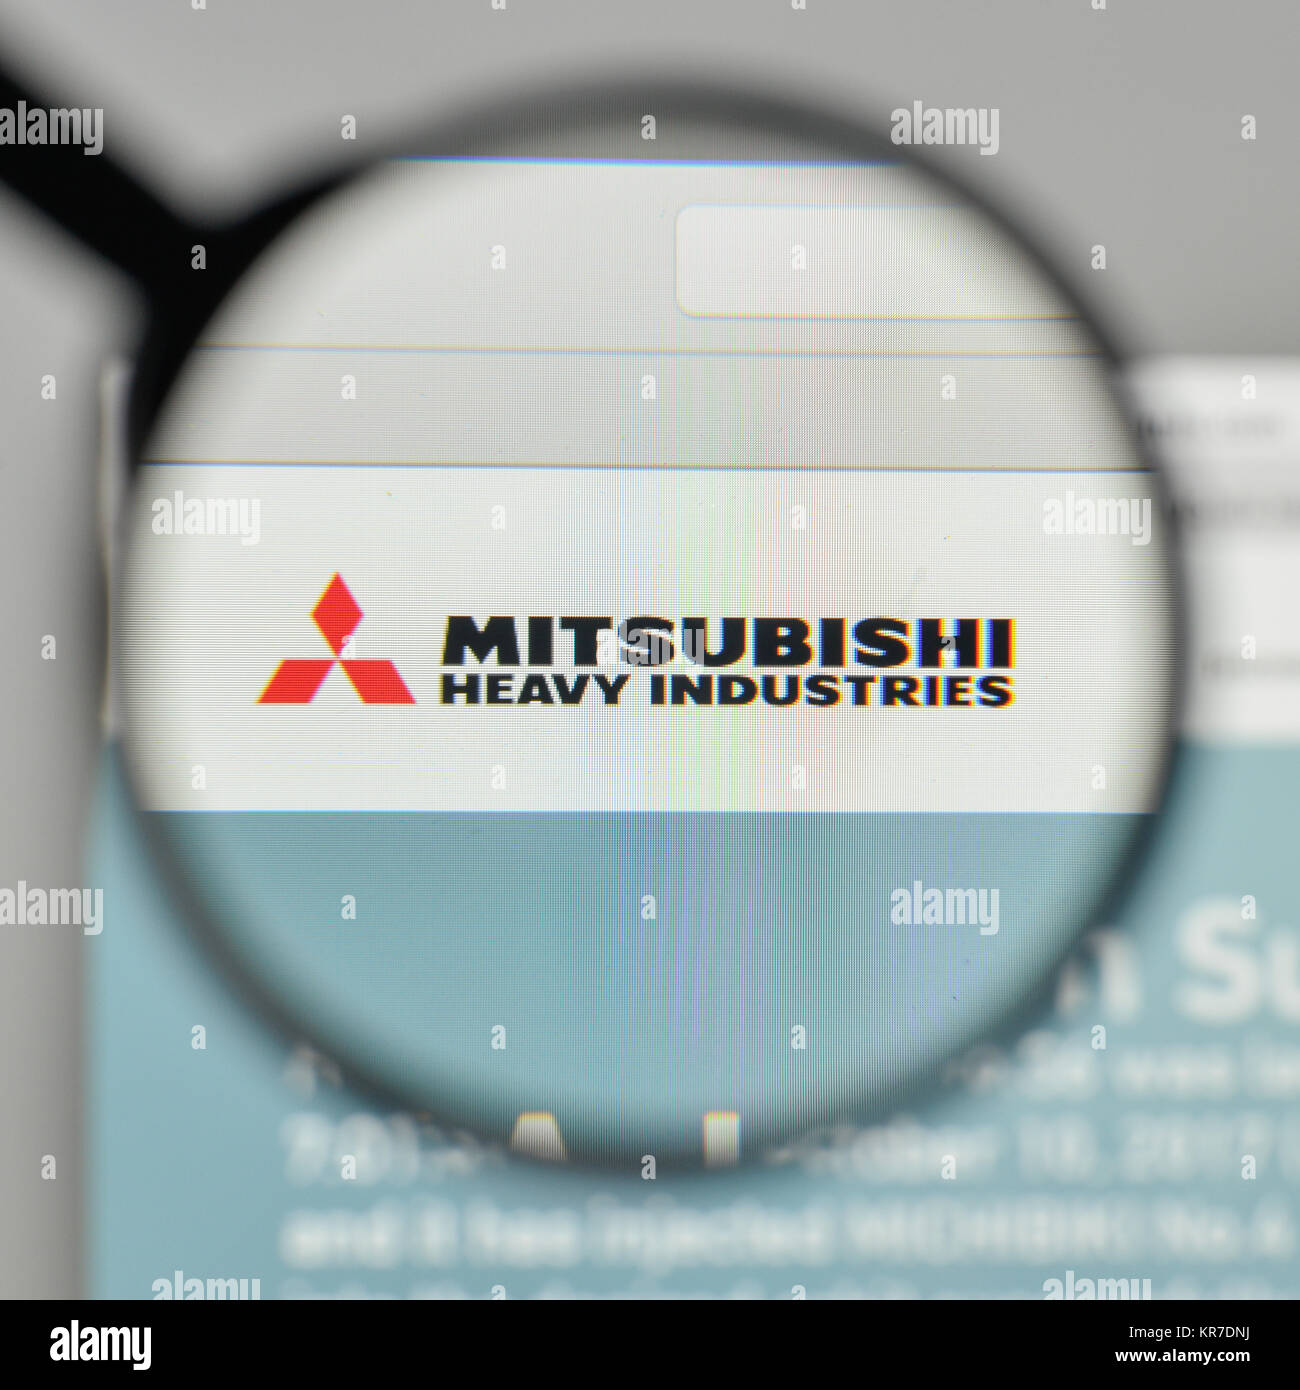 Milan, Italy - November 1, 2017: Mitsubishi Heavy Industries logo on the website homepage. Stock Photo